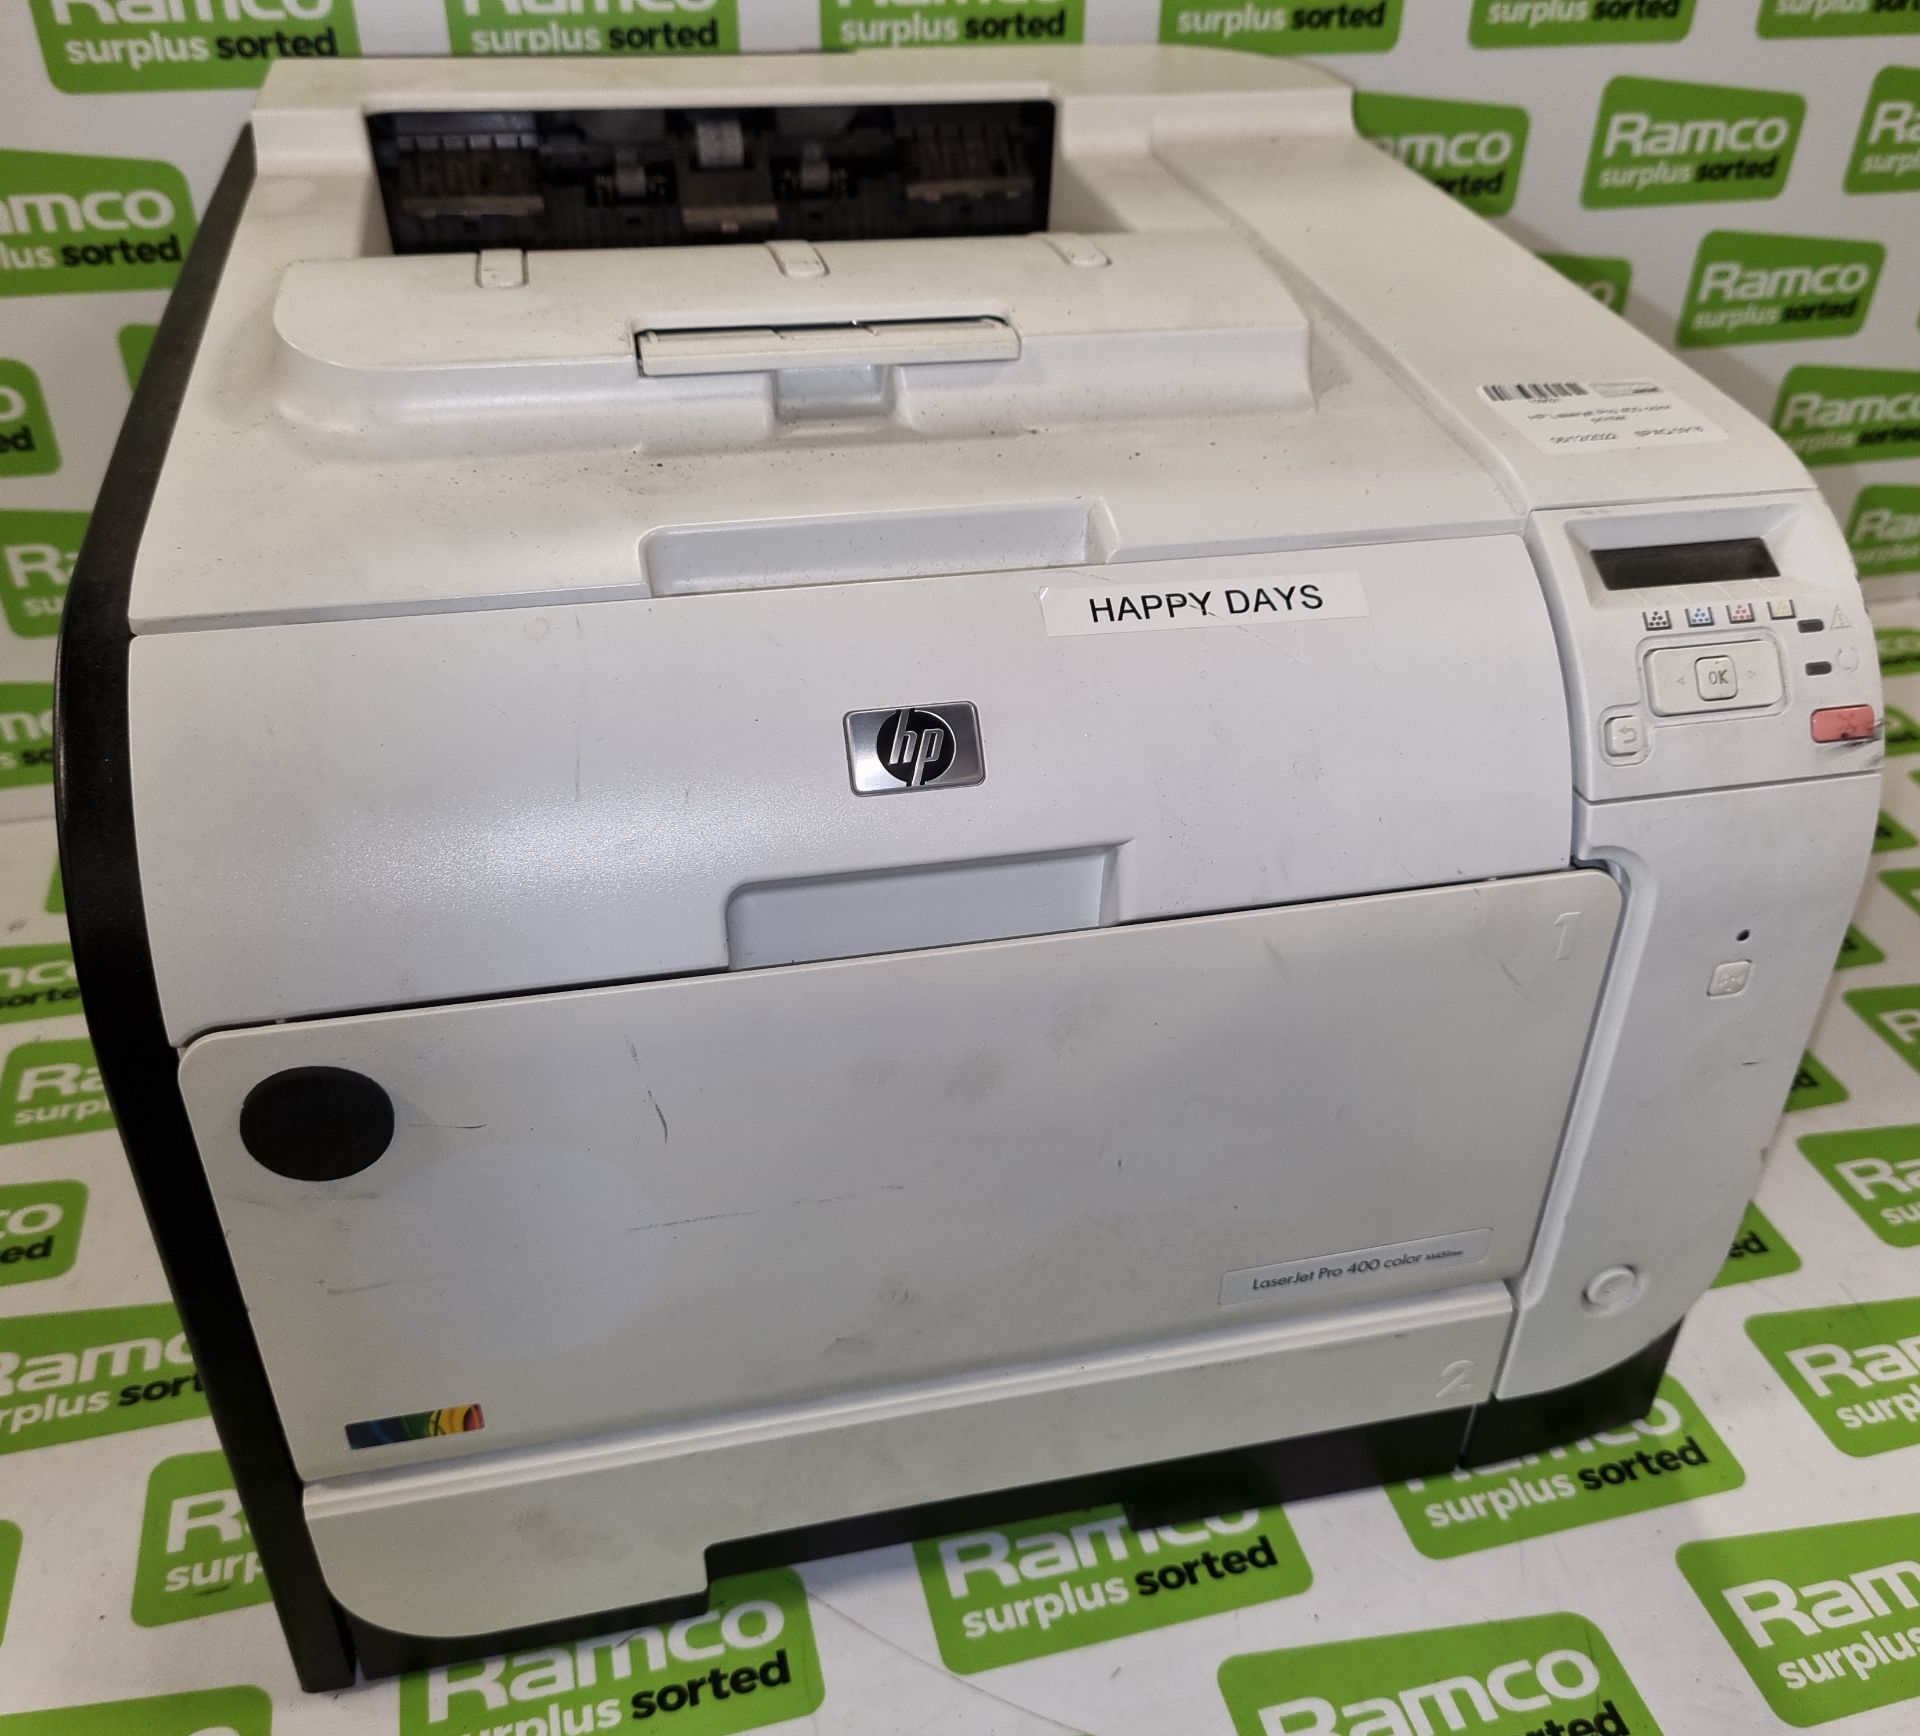 HP Laserjet Pro 400 color printer